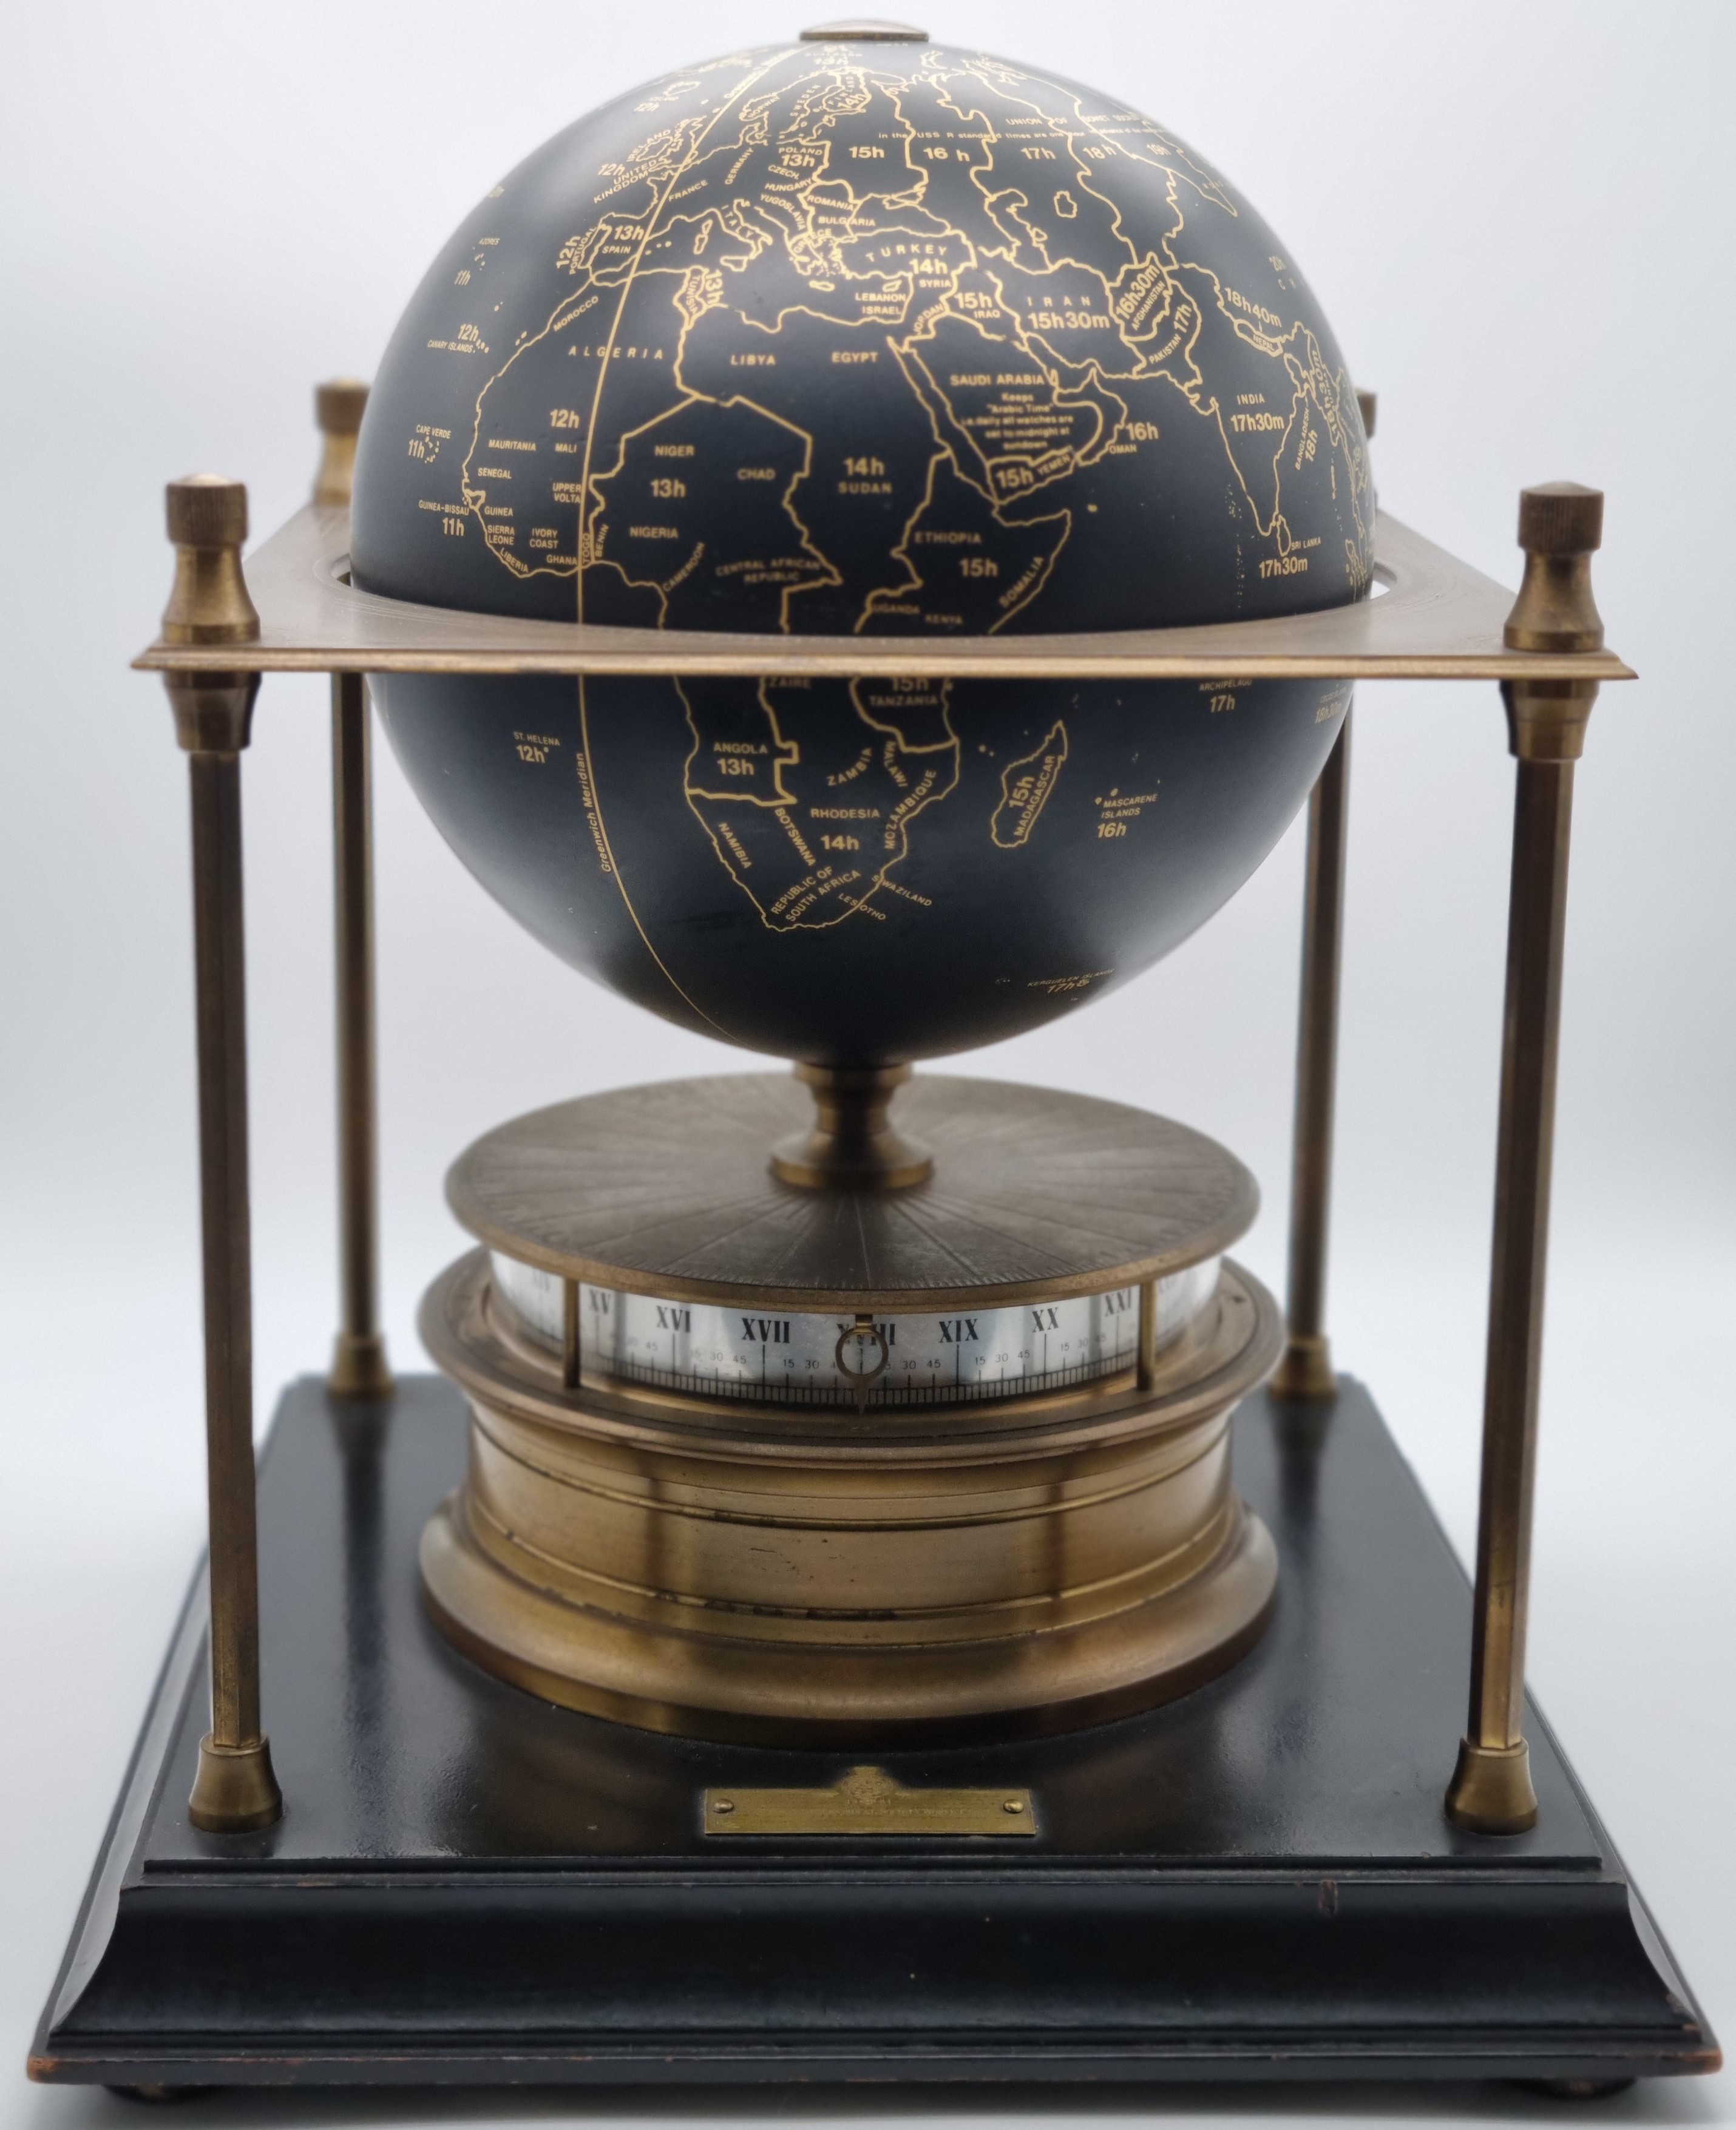 Anonimo The Royal Geographical Society World Timer - Mechanical clock - Very Good Condition | San Giorgio a Cremano